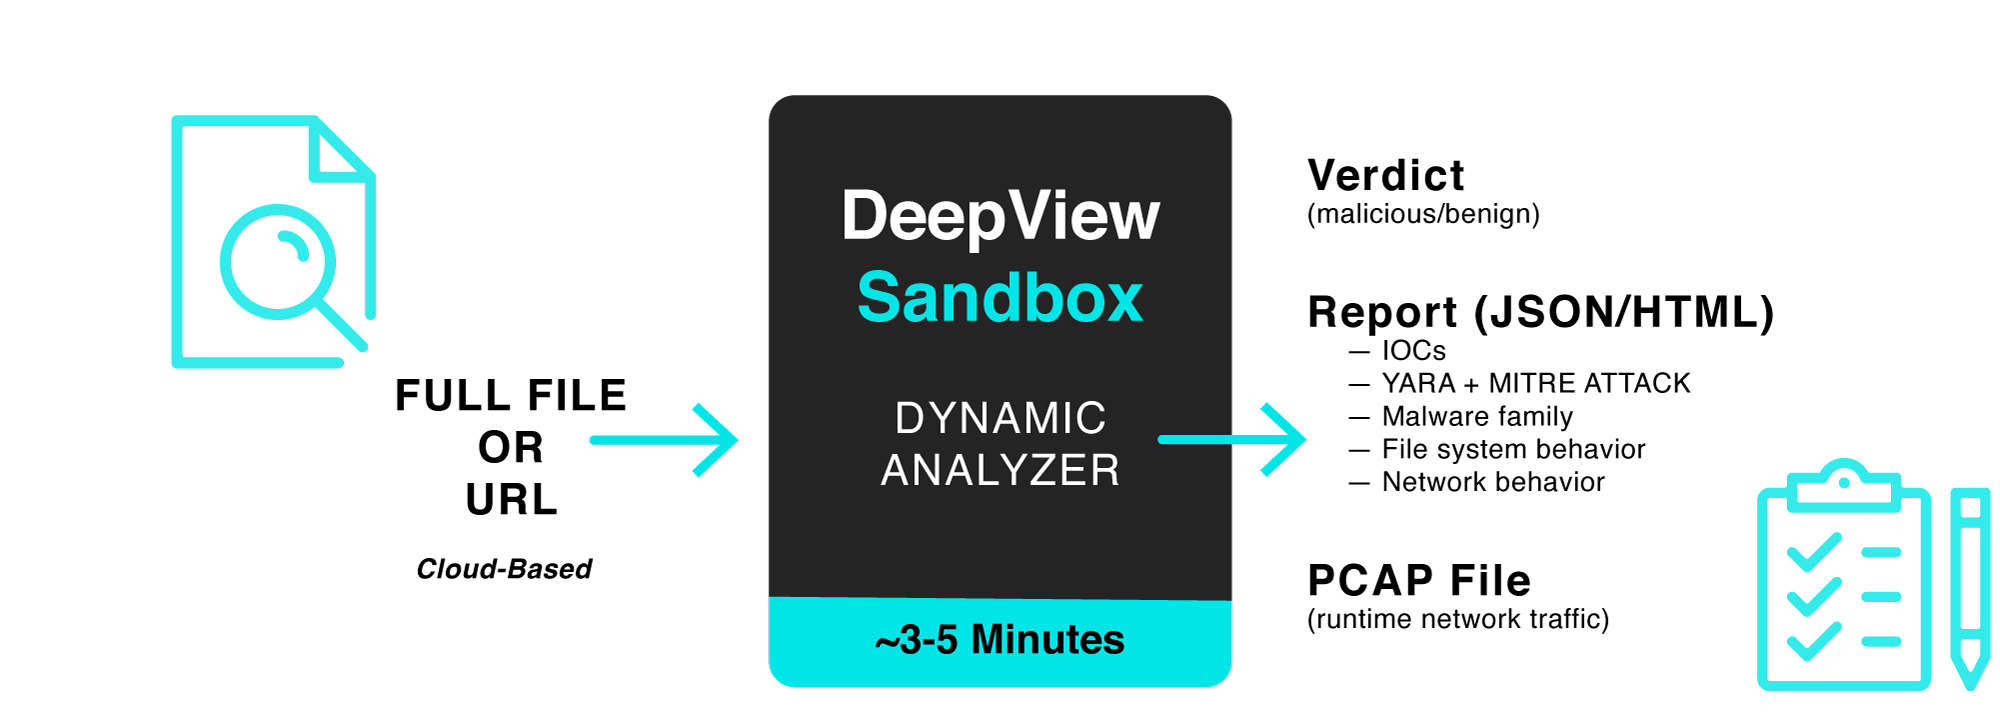 SecondWrite DeepView Sandbox Workflow